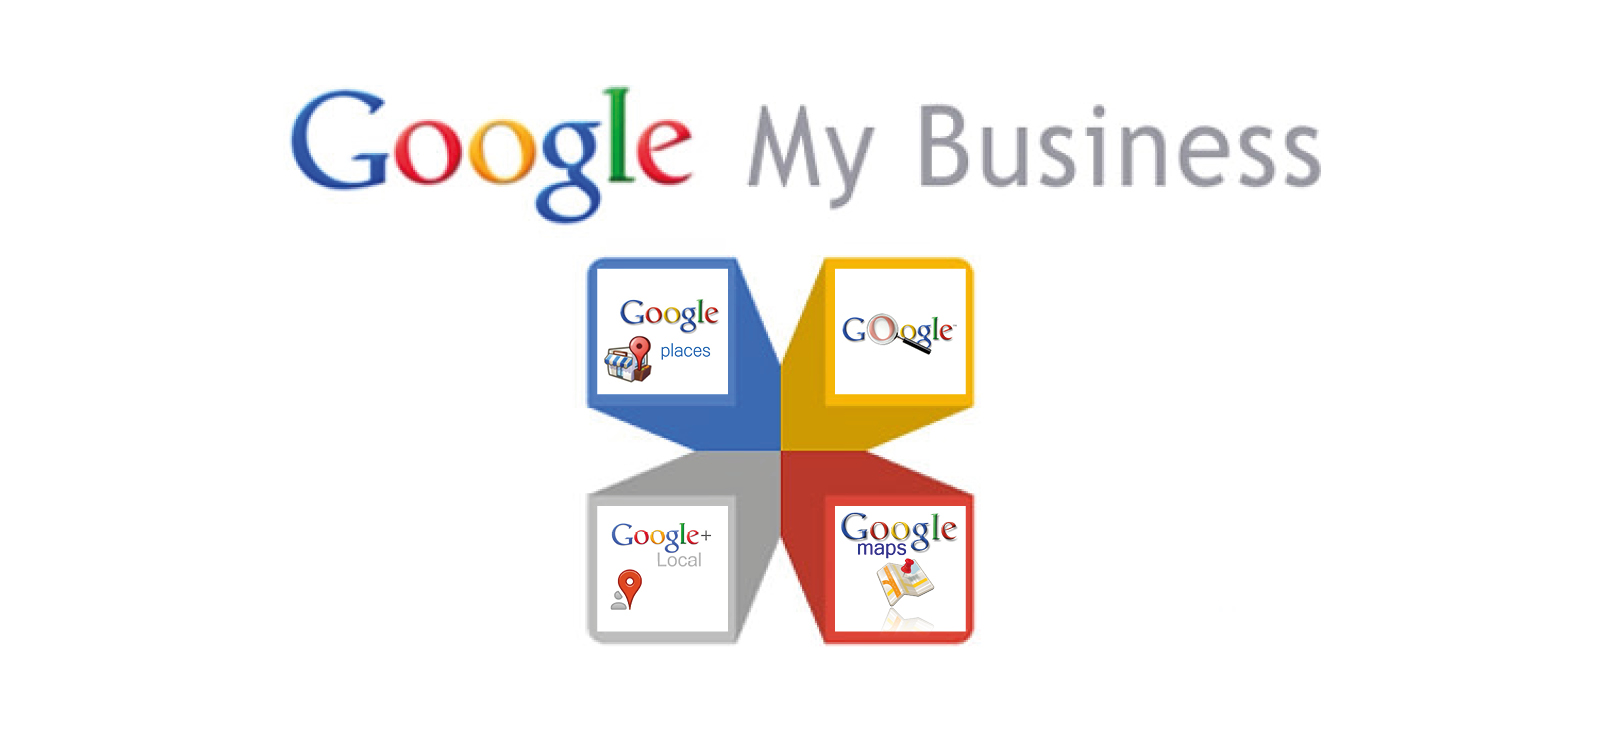 Google my business Logo